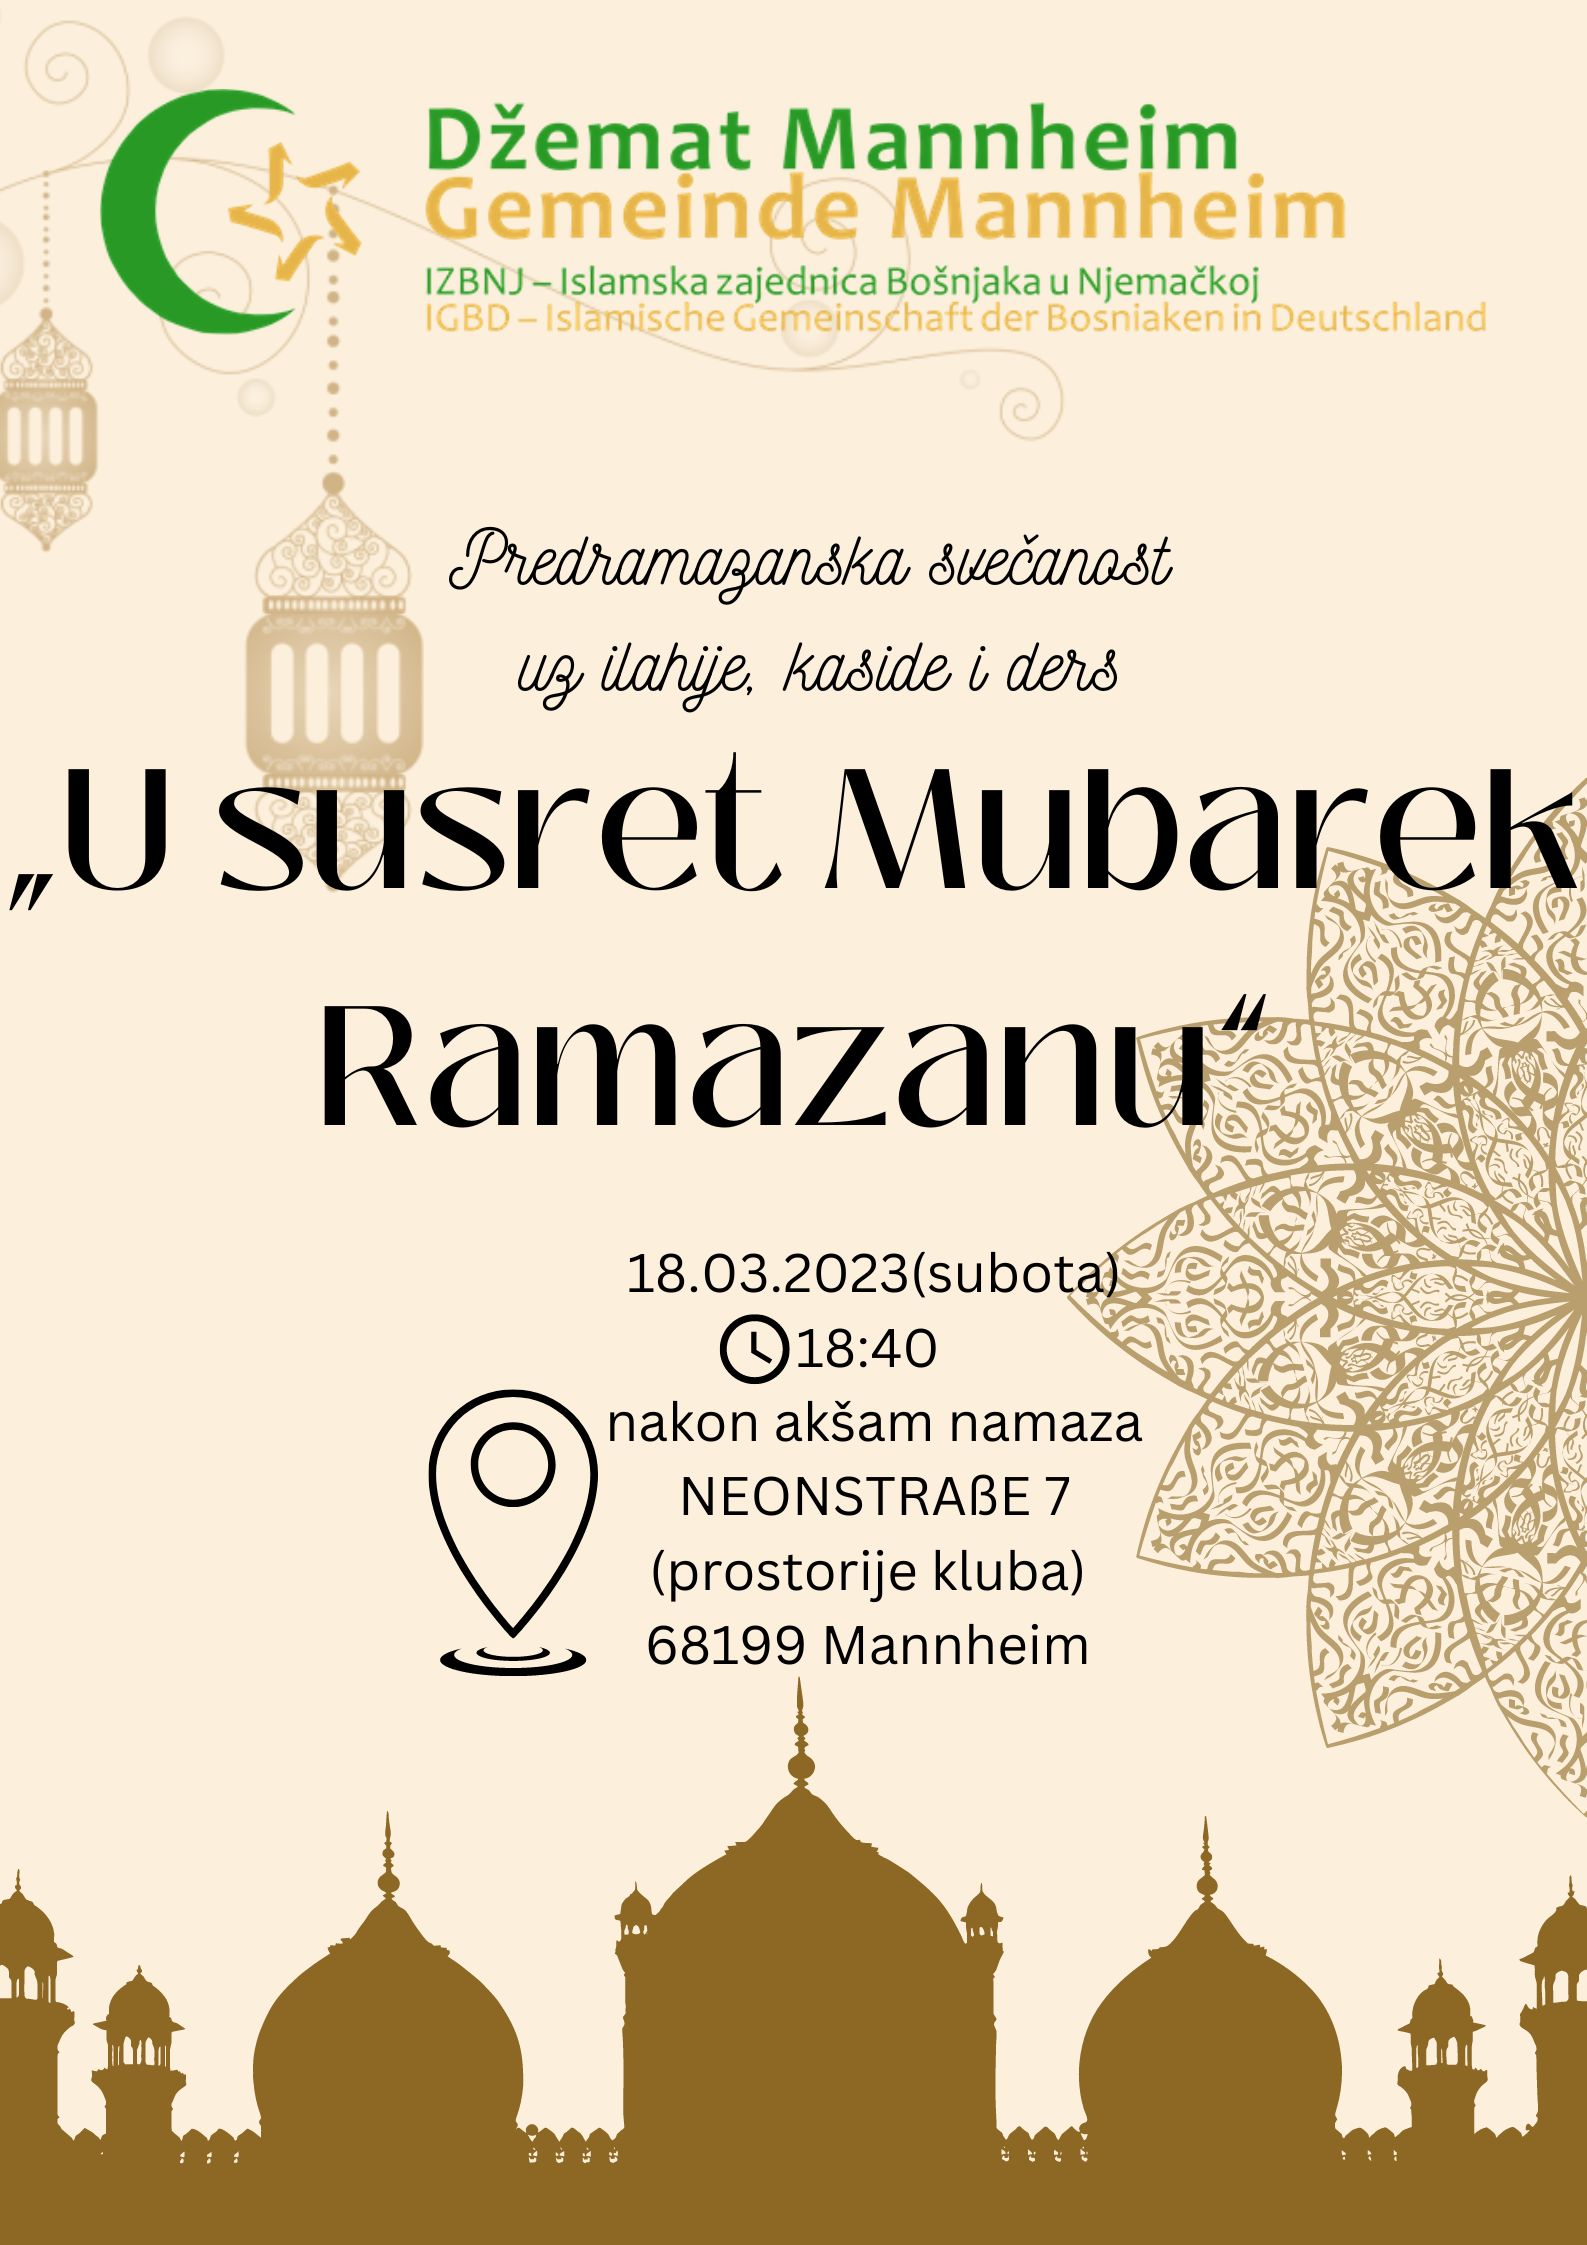 Predramazanska svečanost ”U susret Mubarek Ramazanu”